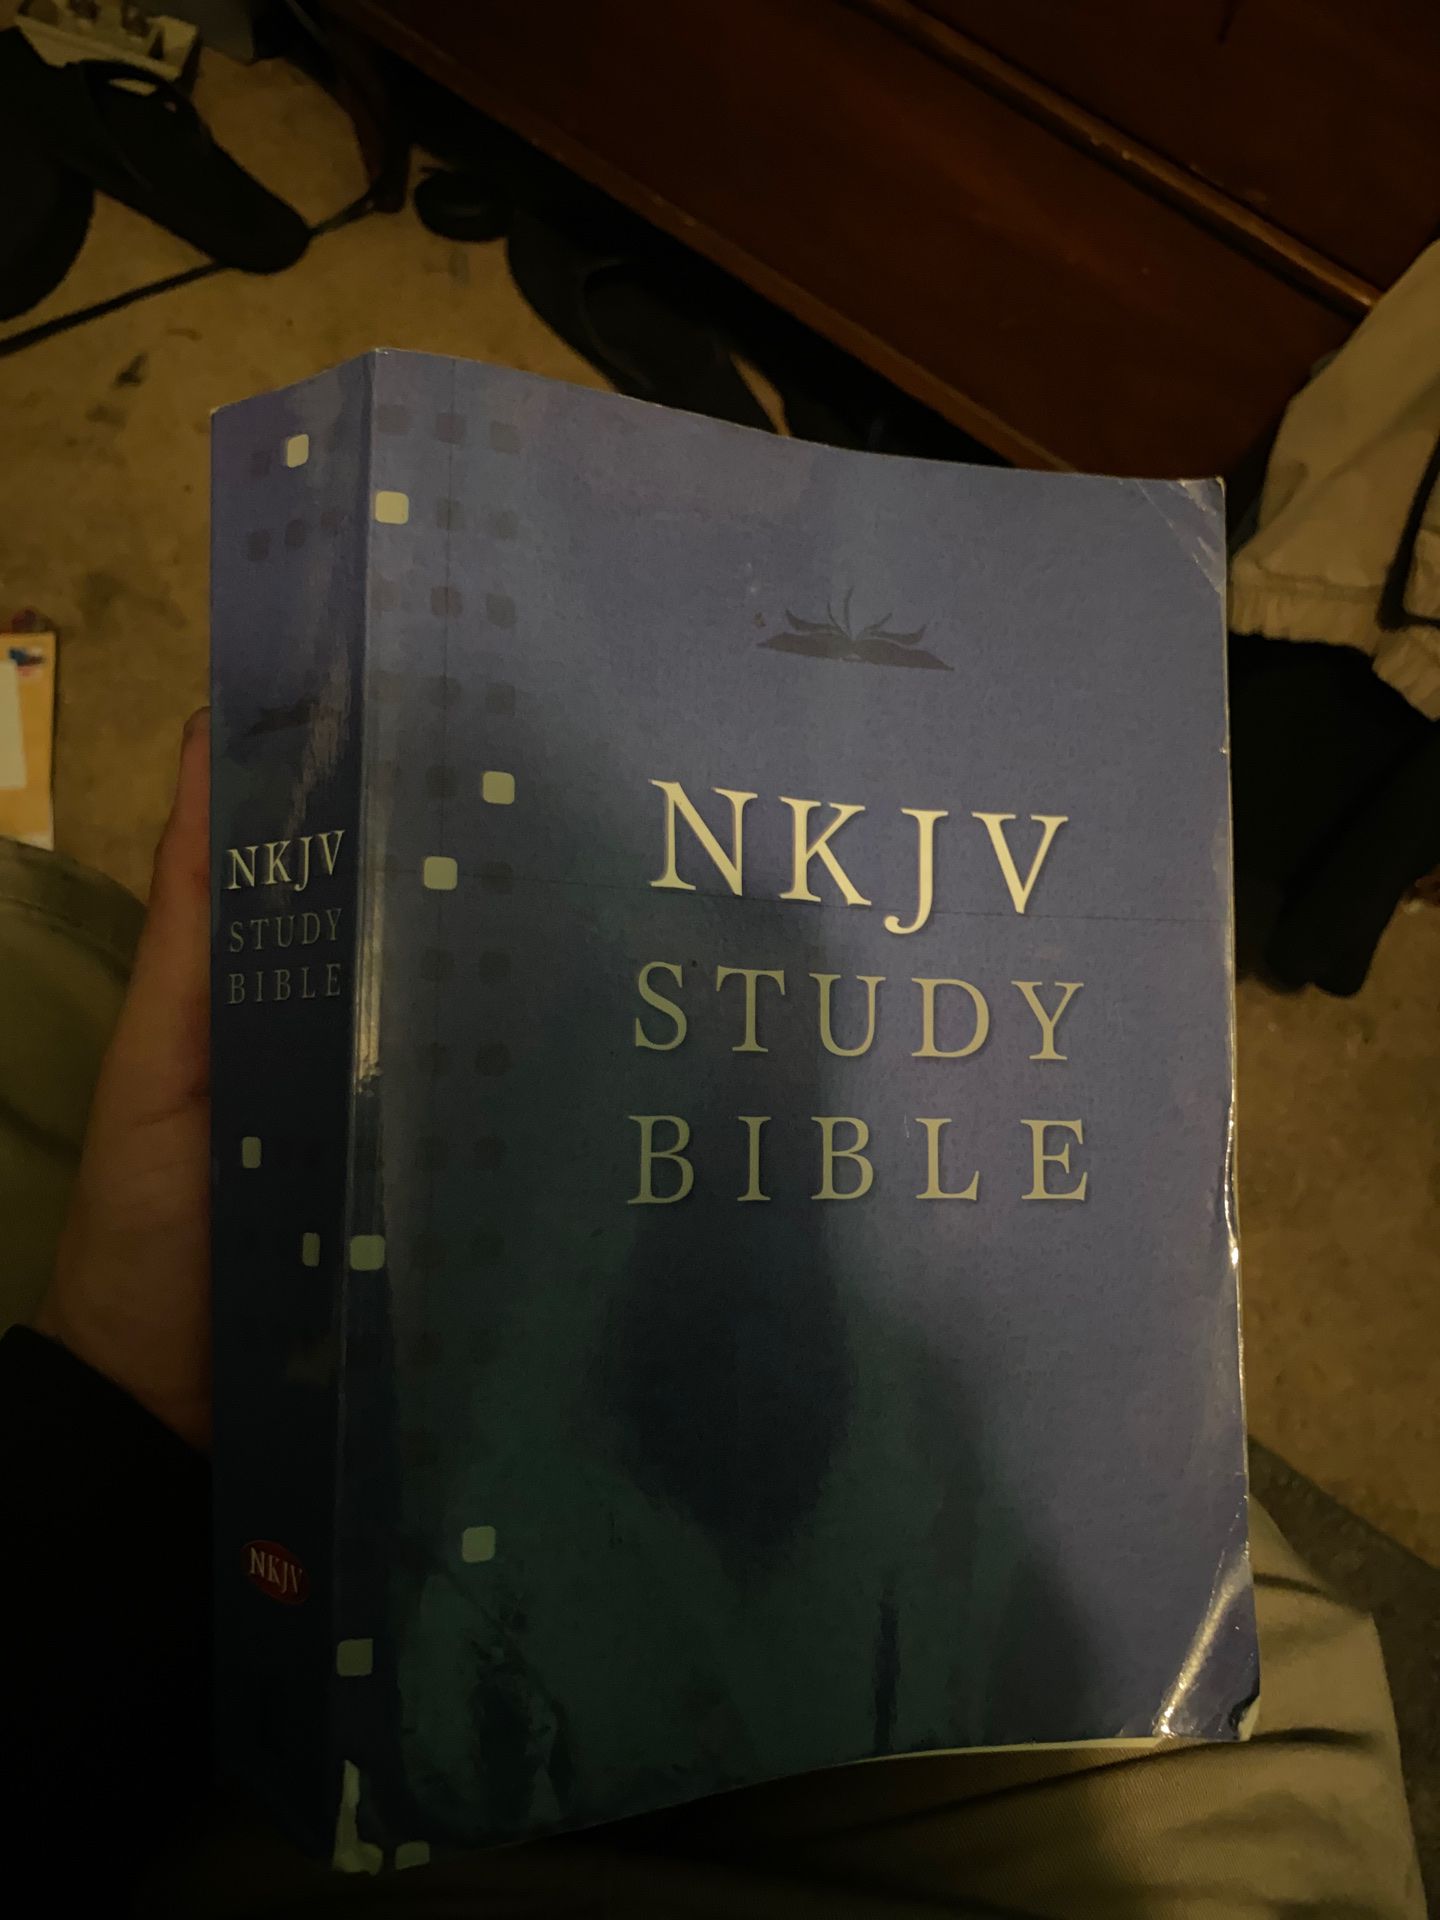 NKJV STUDY BIBLE